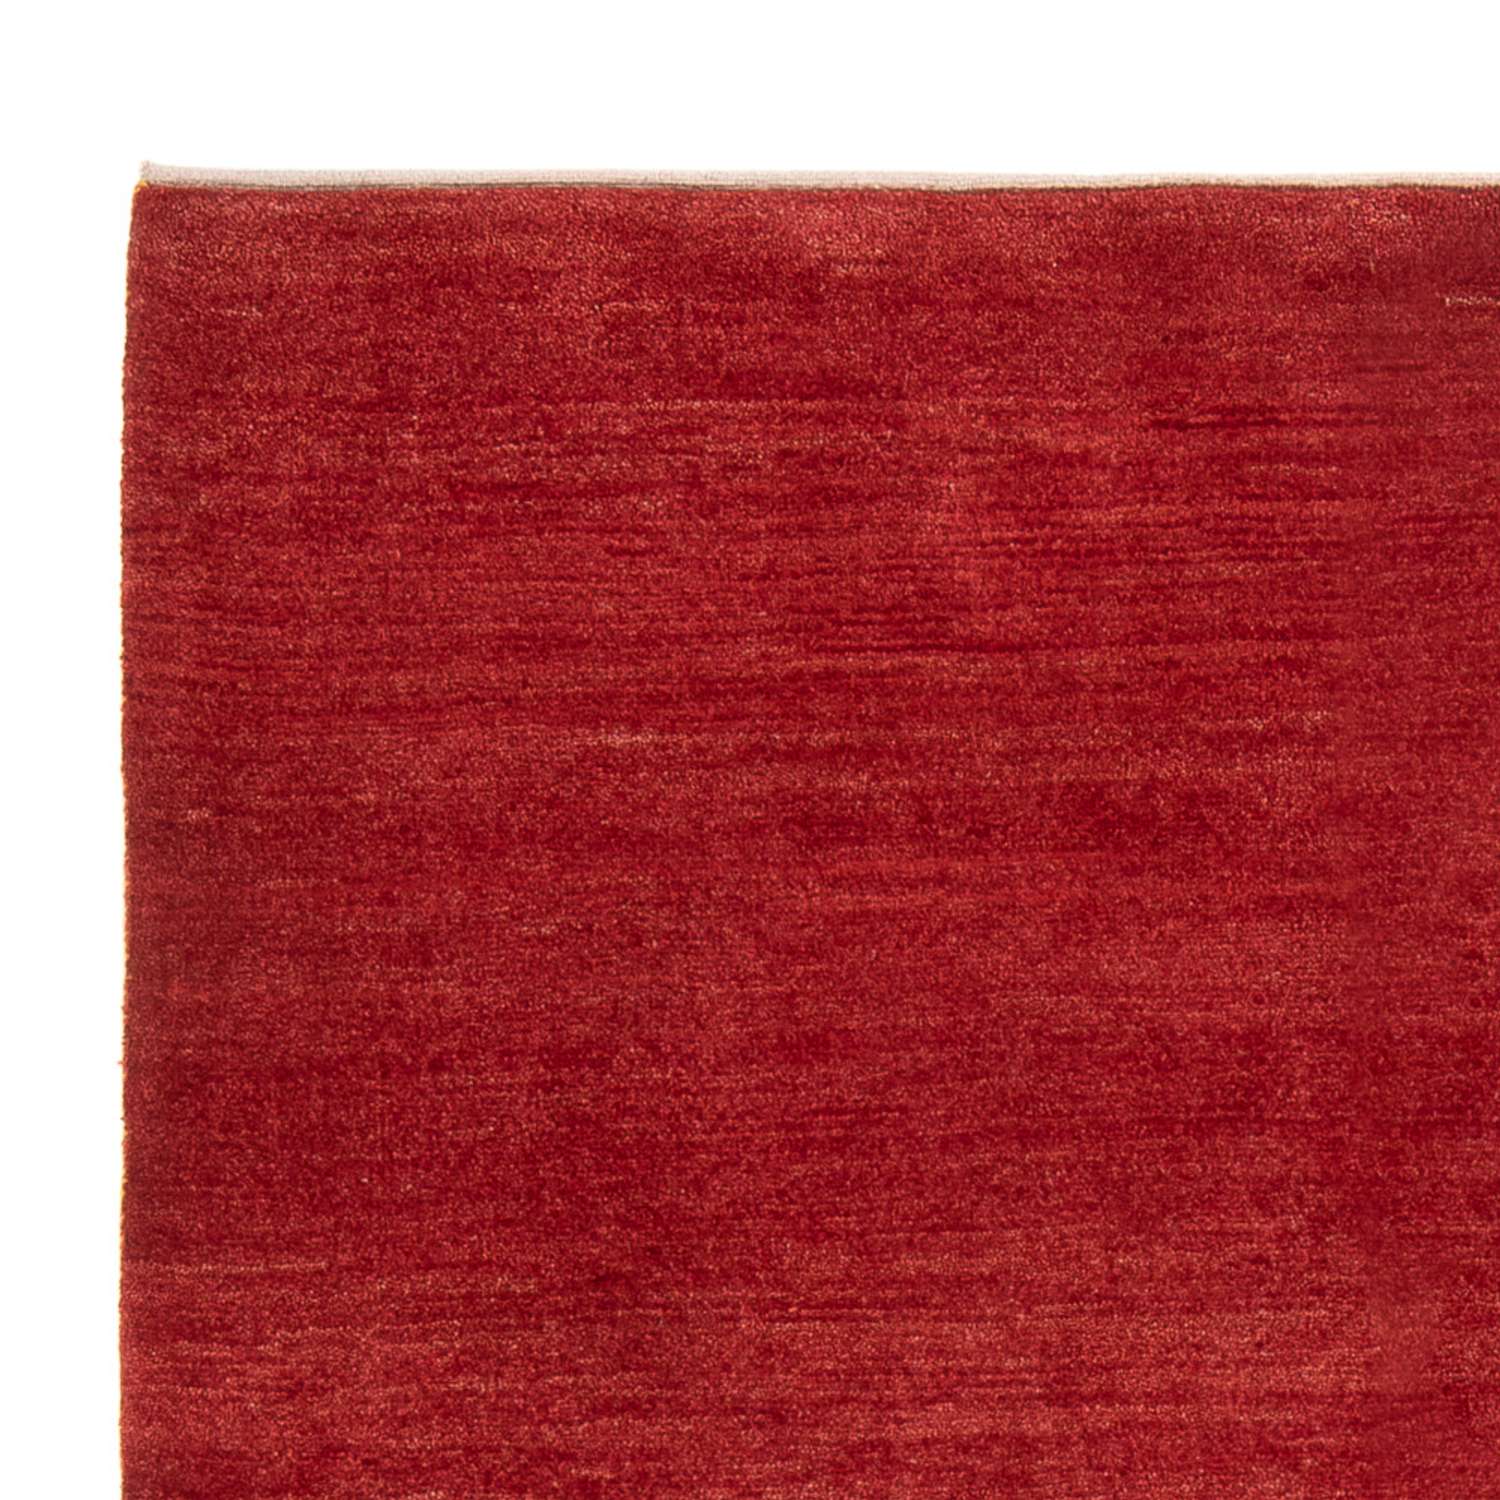 Gabbeh-teppe - persisk - 248 x 170 cm - rød